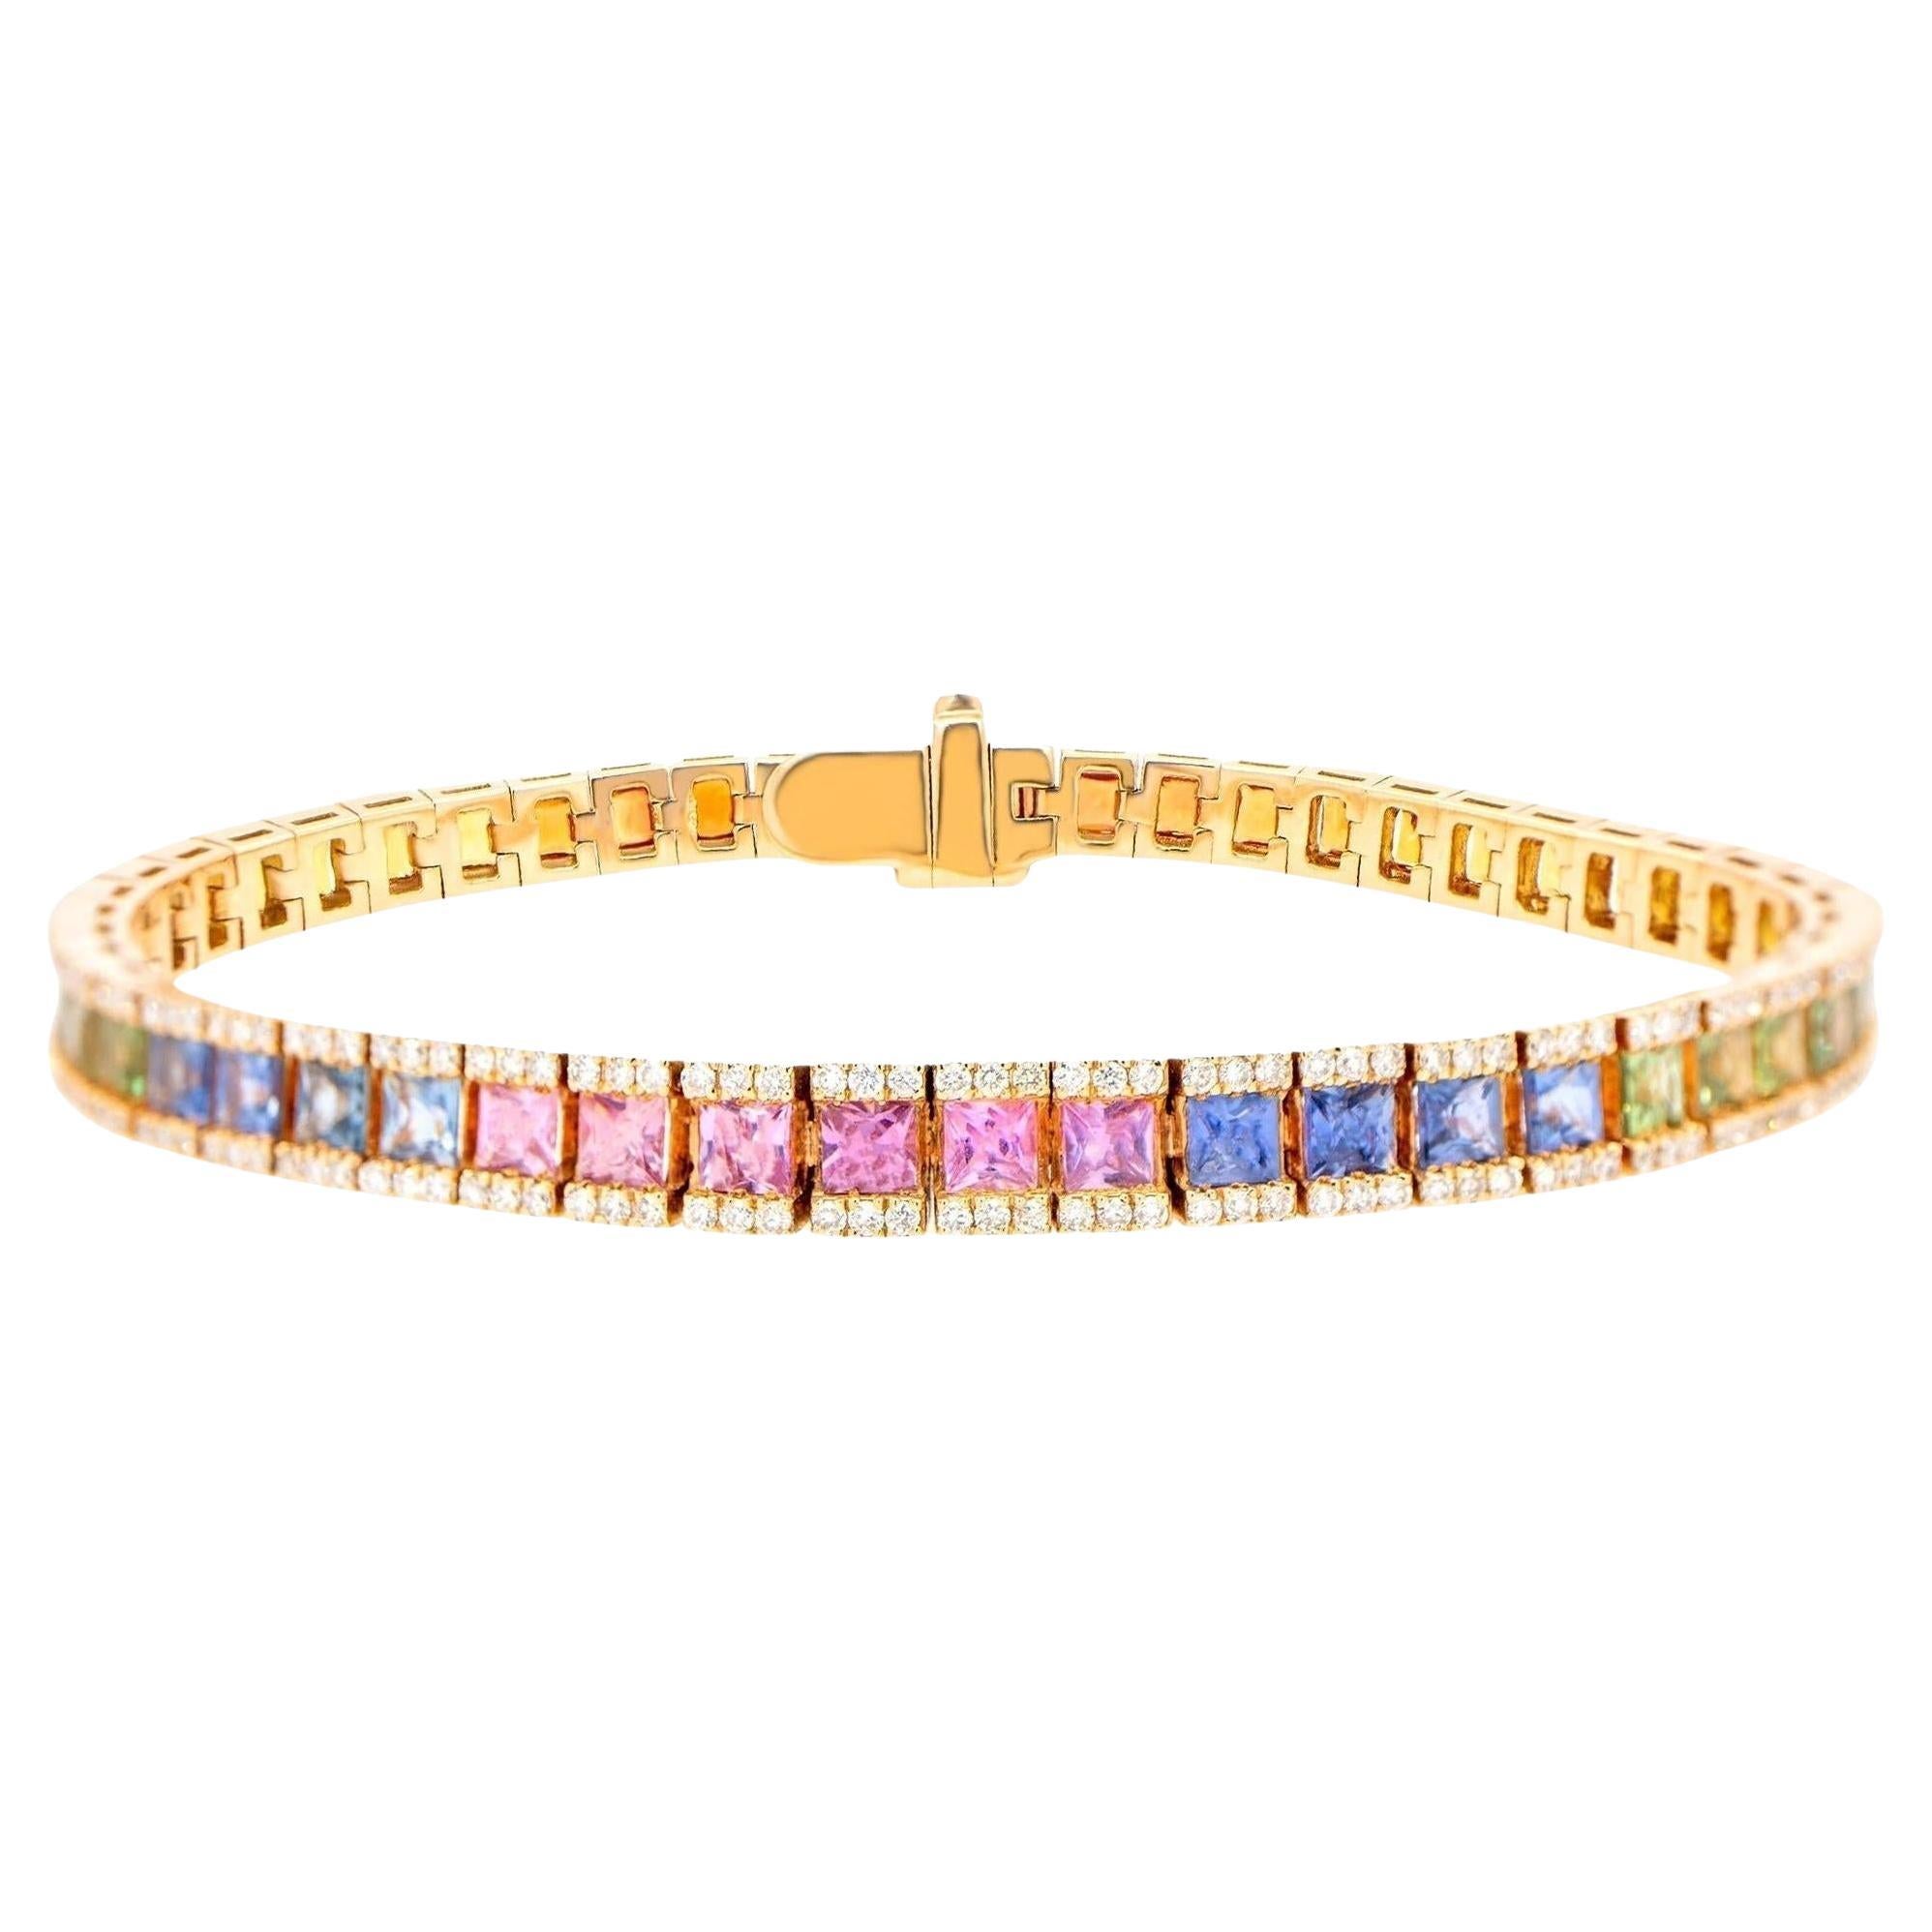 Square Cut Multicolor Sapphires Rainbow Bracelet Diamond Setting 8.9 Carats 18K